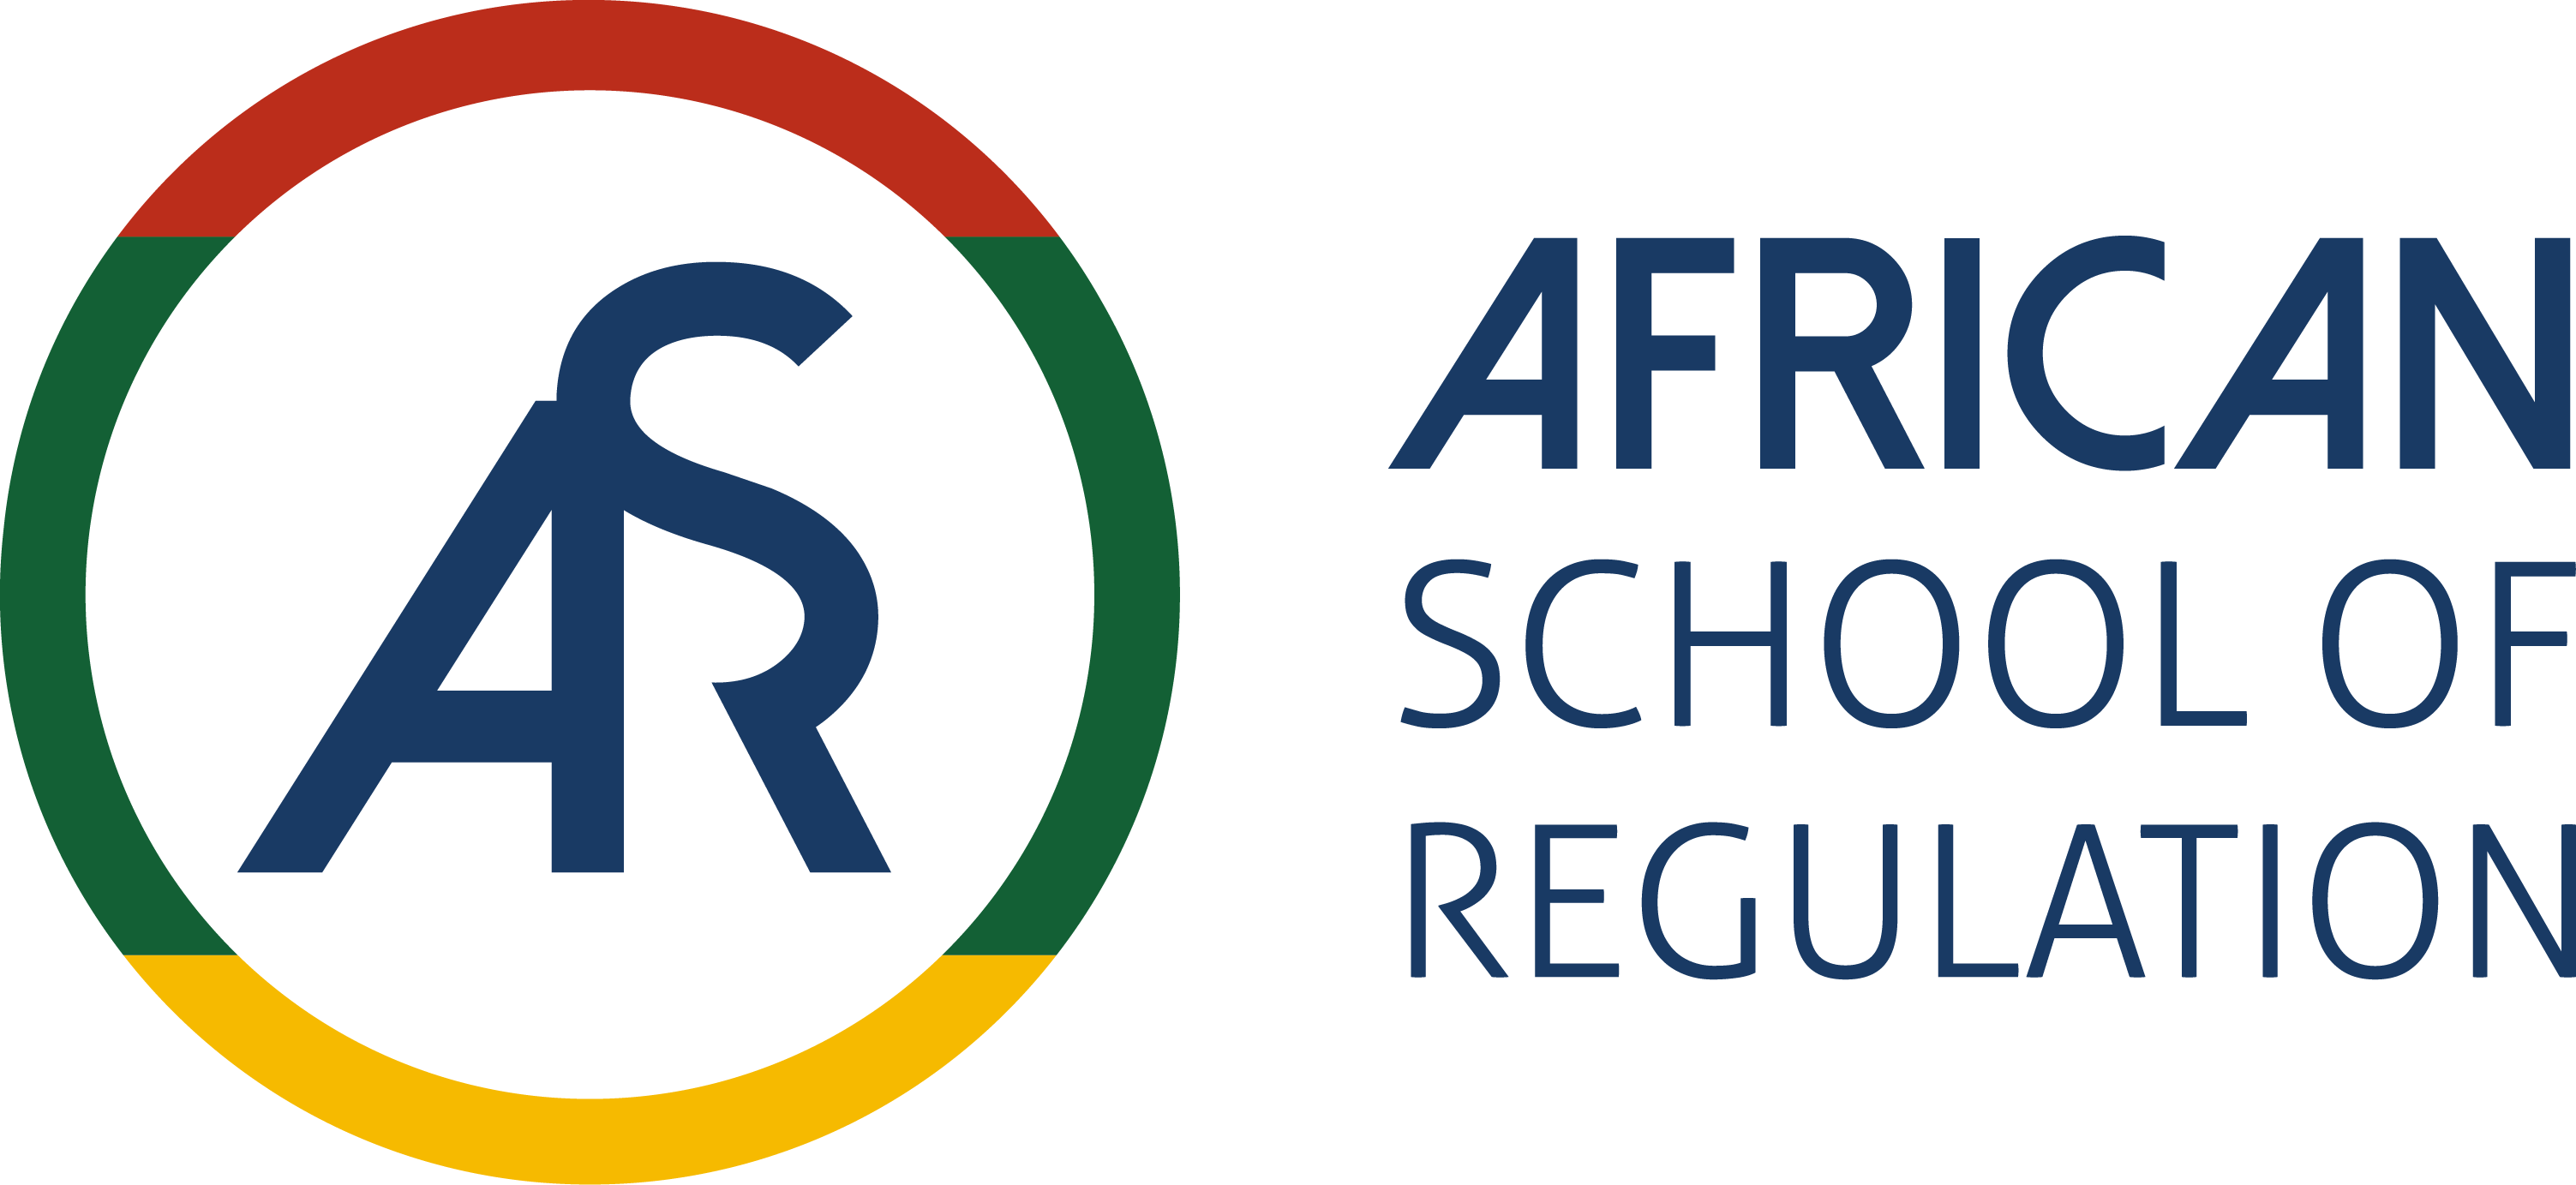 African School of Regulation logo